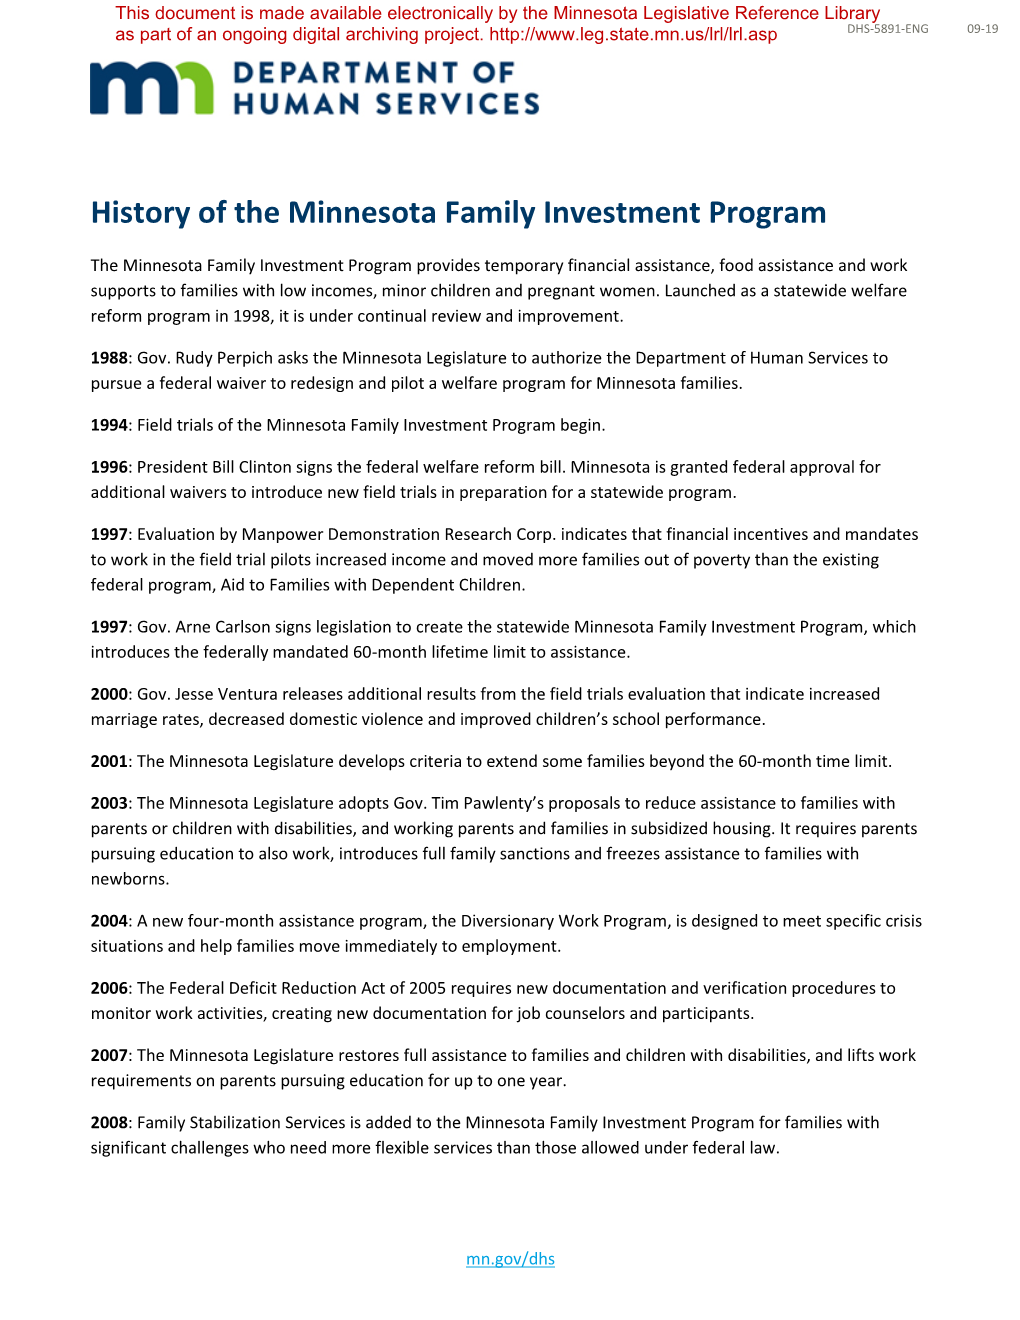 History of the Minnesota Family Investment Program